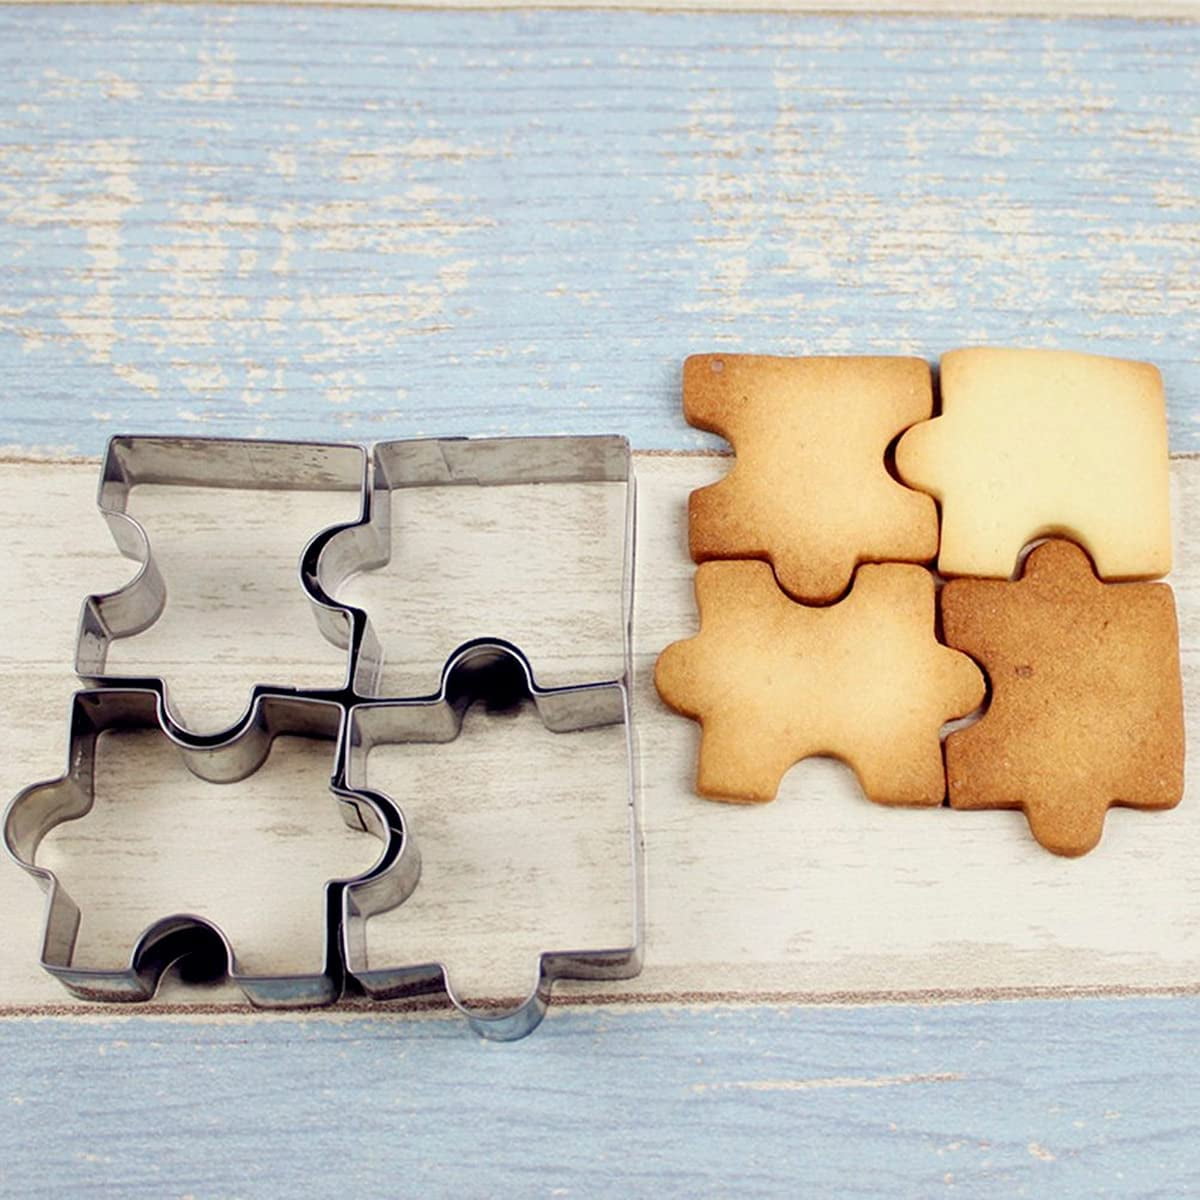 Puzzle Piece Cookie Cutter 